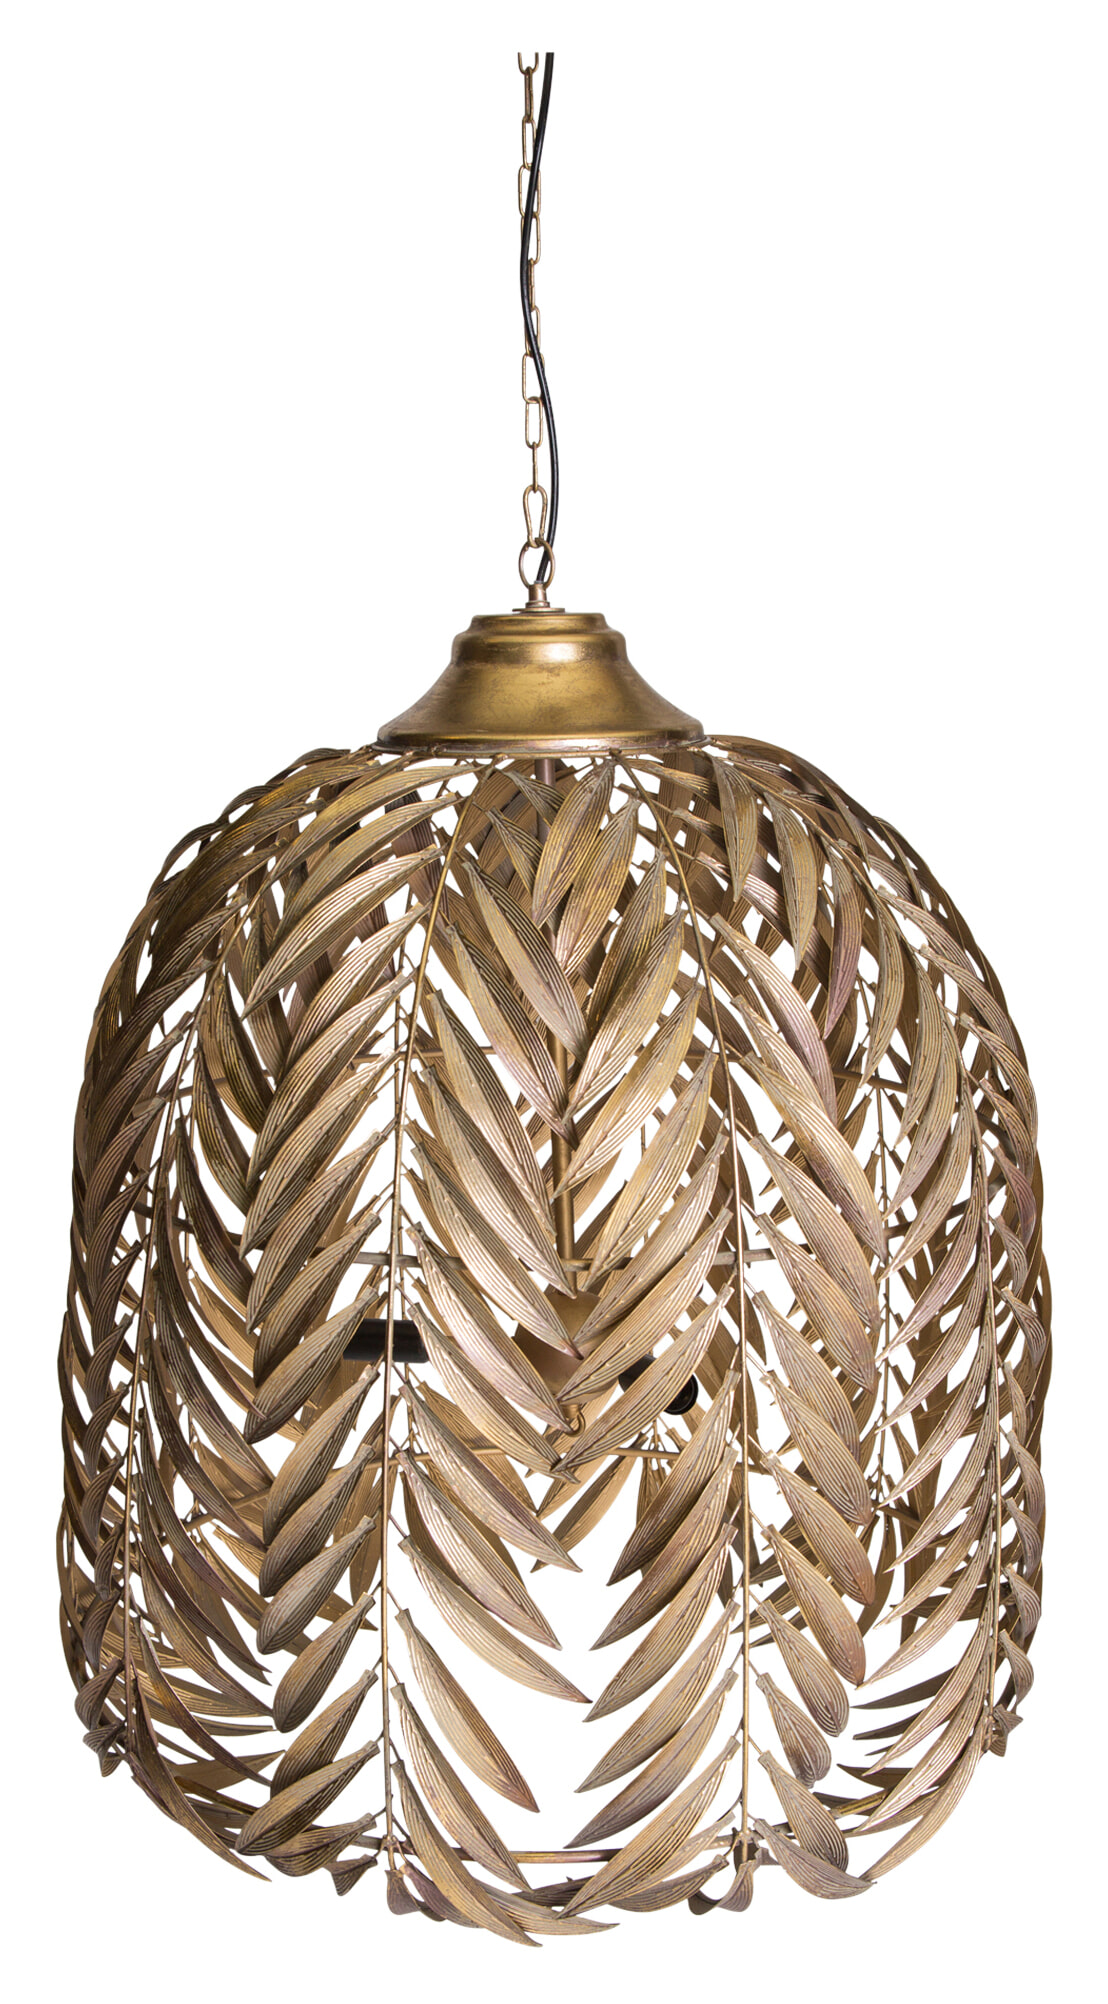 PTMD Mea Gold hanglamp metaal met palm blad design lang